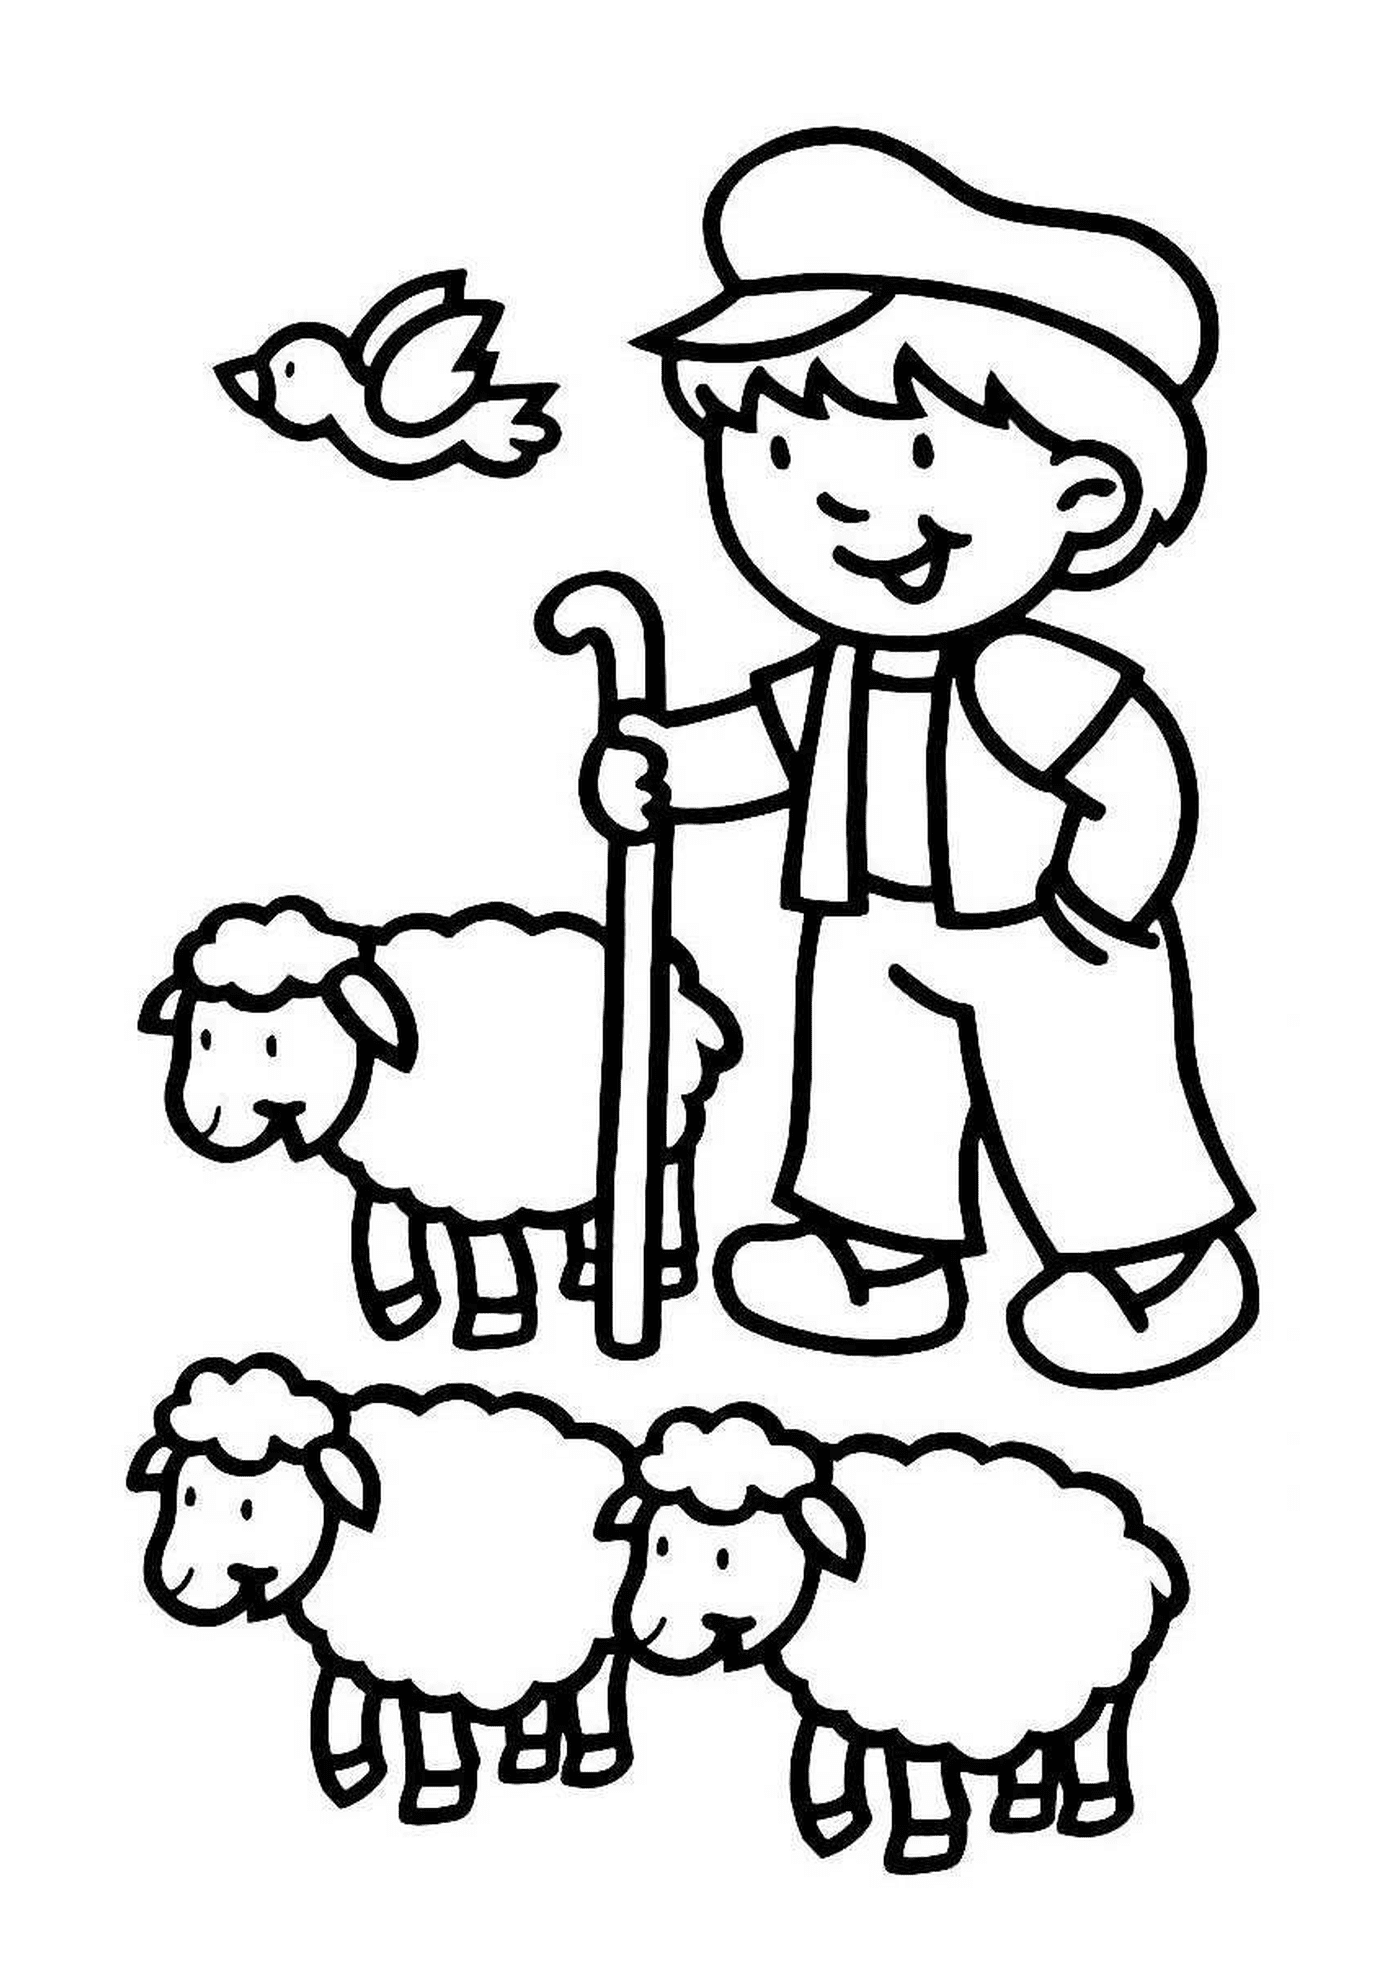  Granjero rodeado de muchas ovejas 